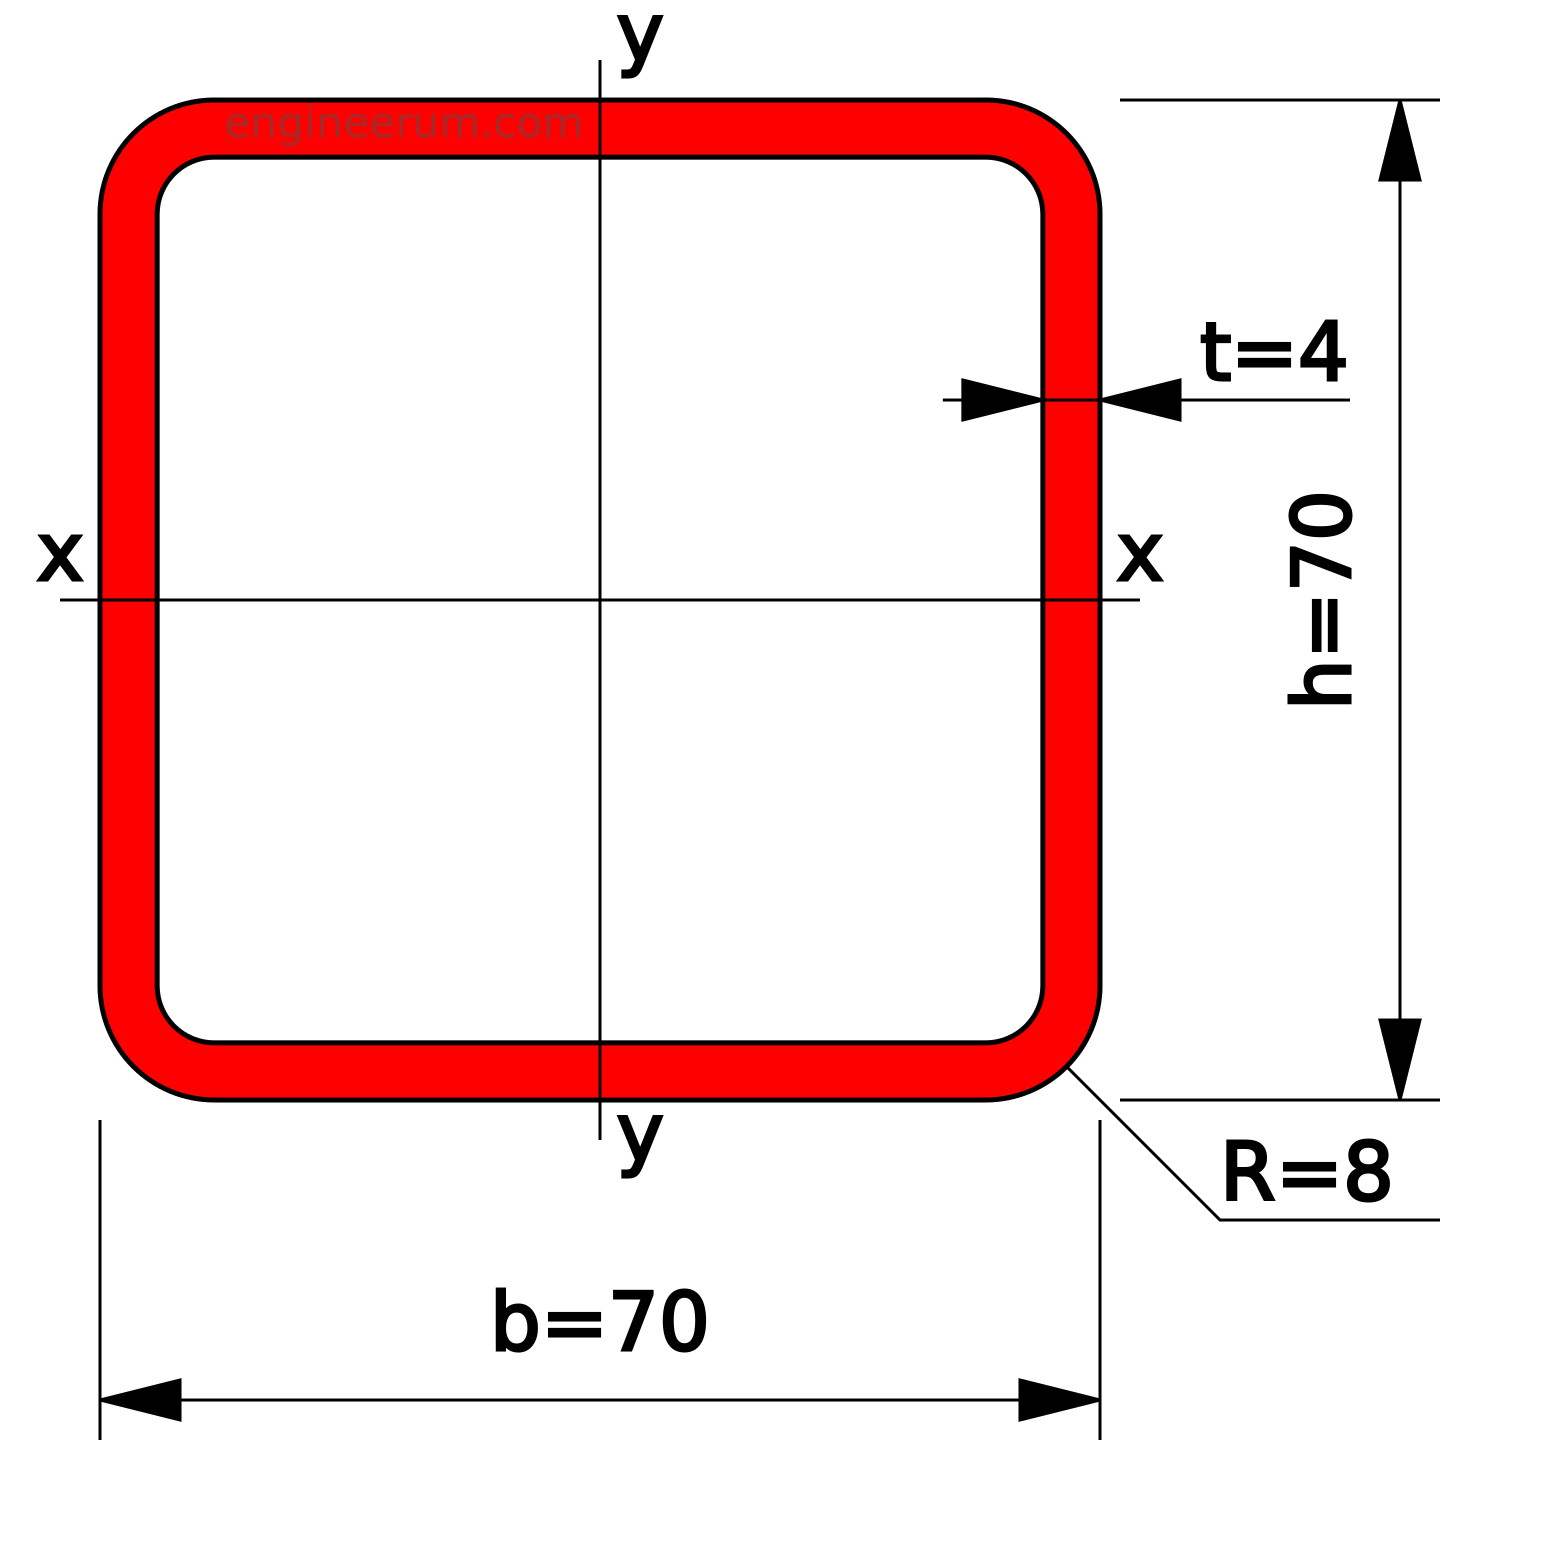 Труба 70x4 квадратная по ГОСТ 30245-2003. Размеры и геометрические